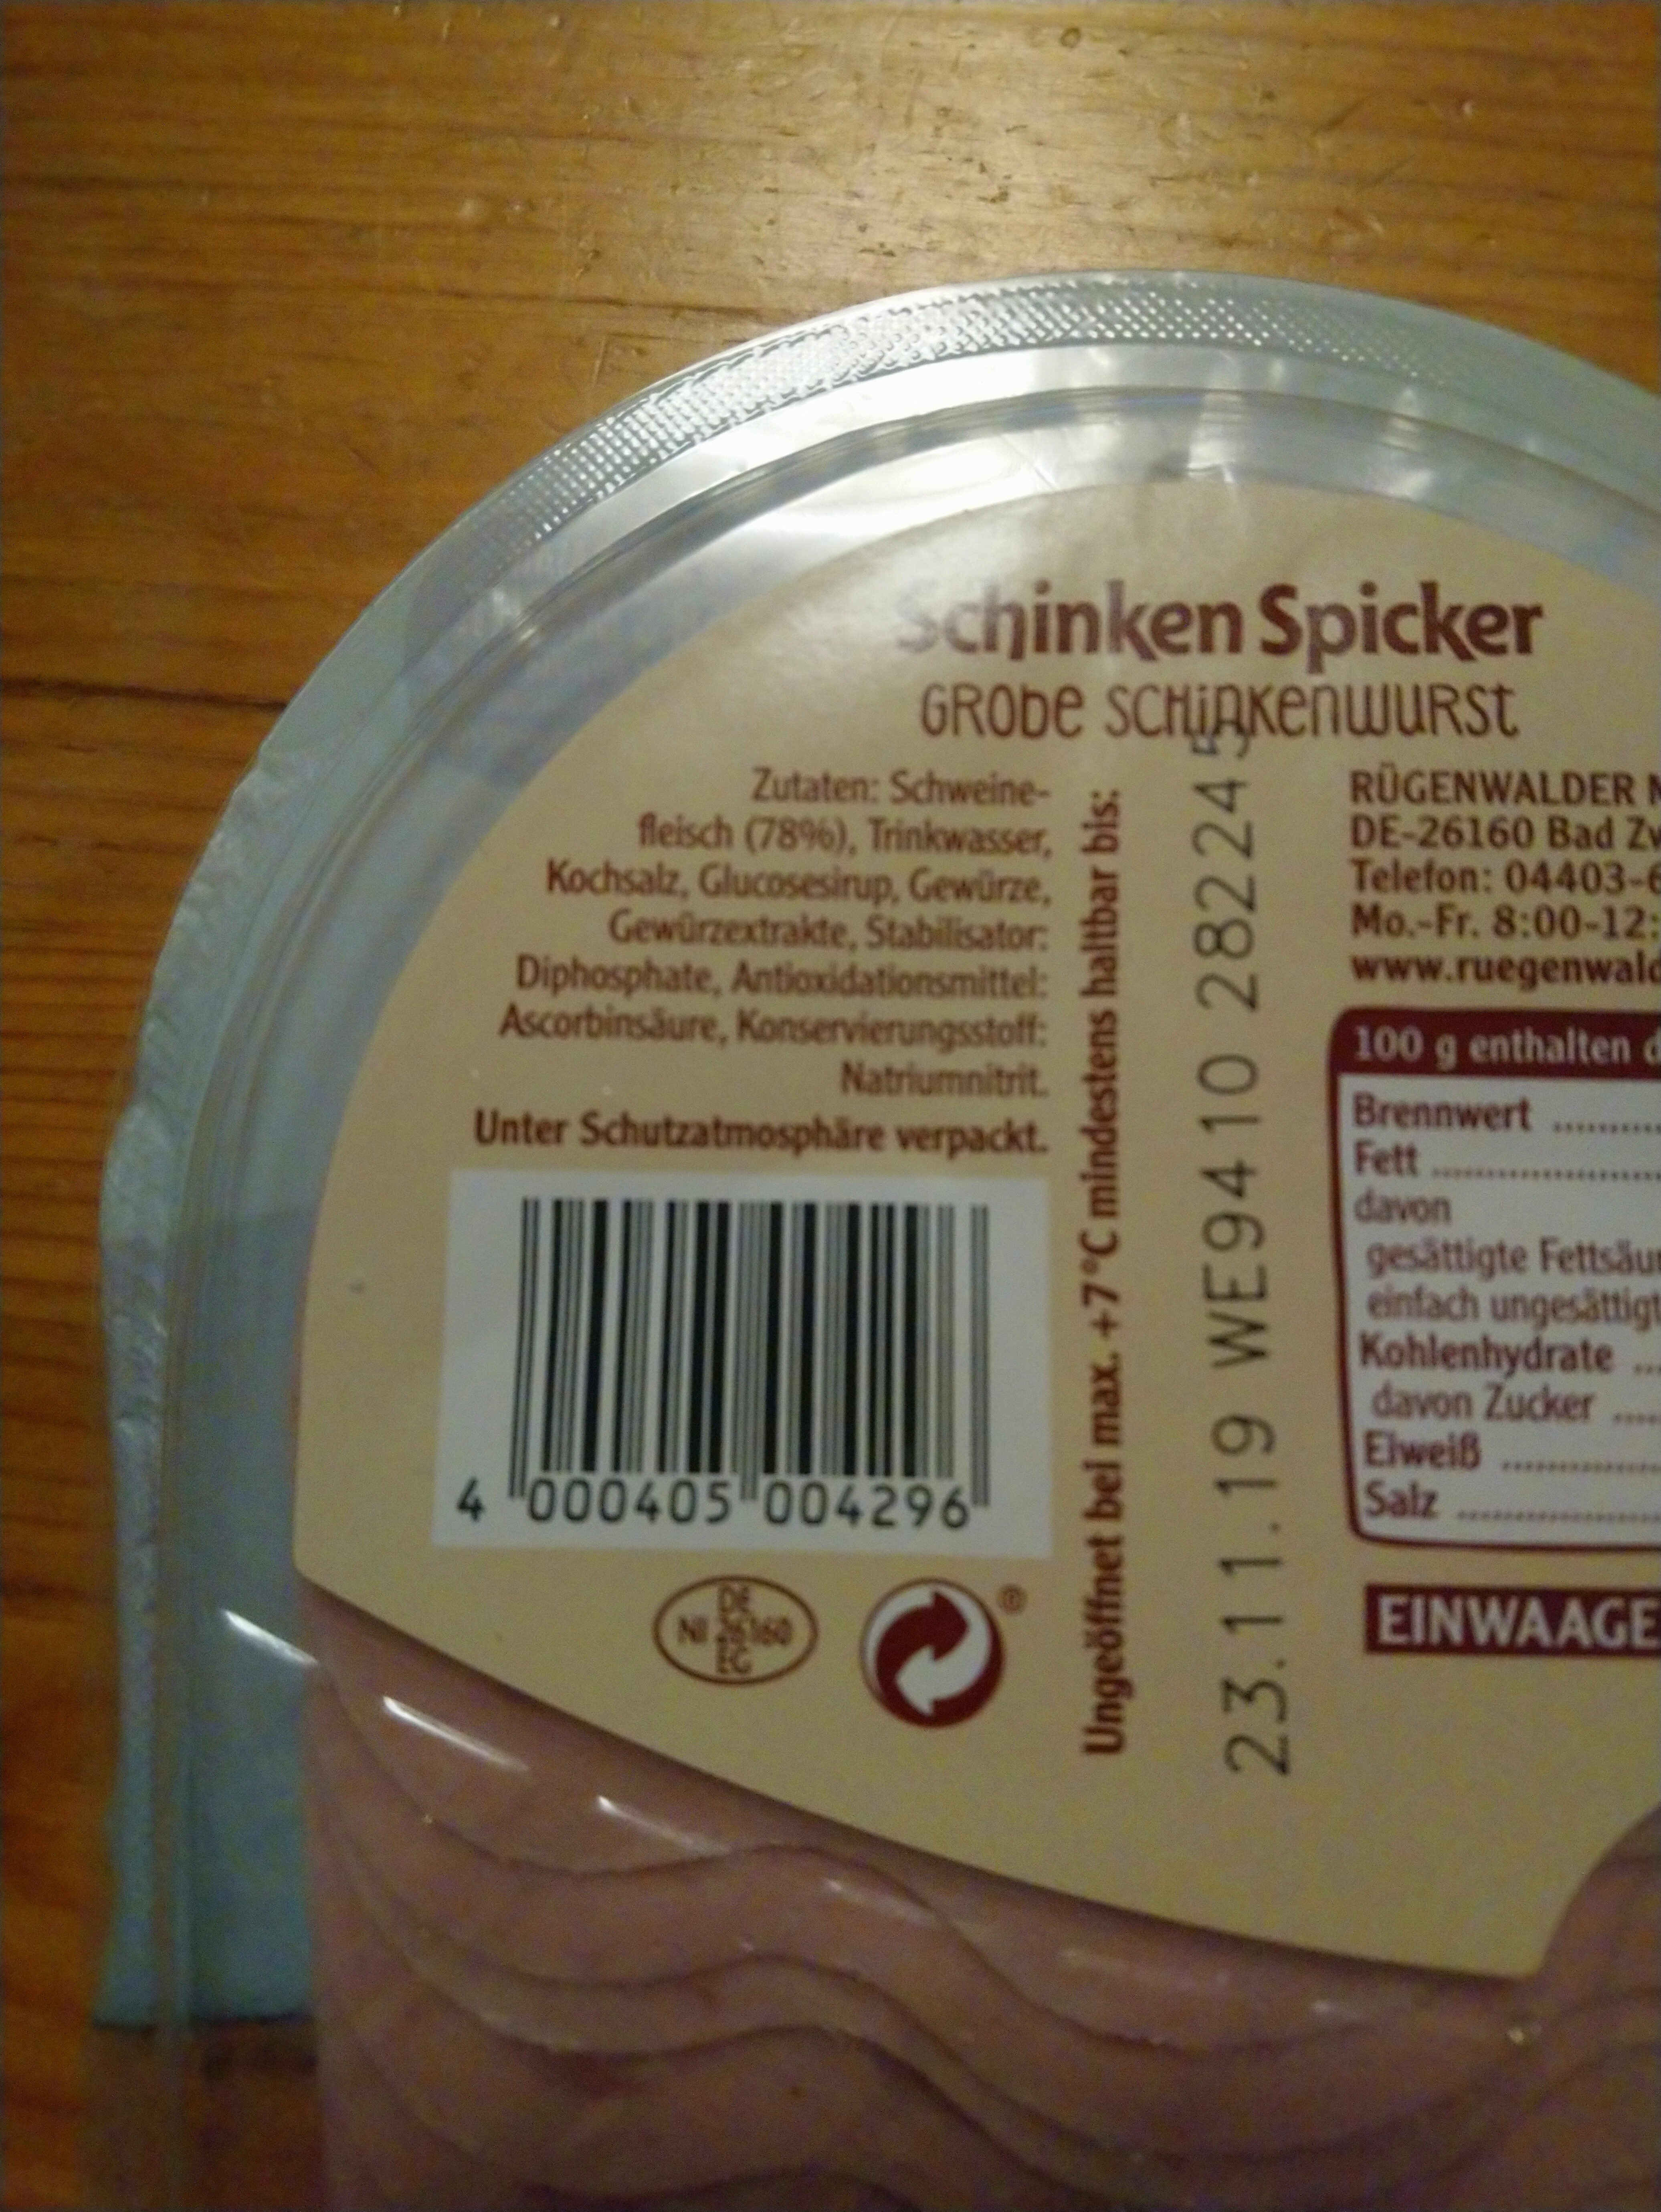 Grobe Schinkenwurst - Ingredients - de